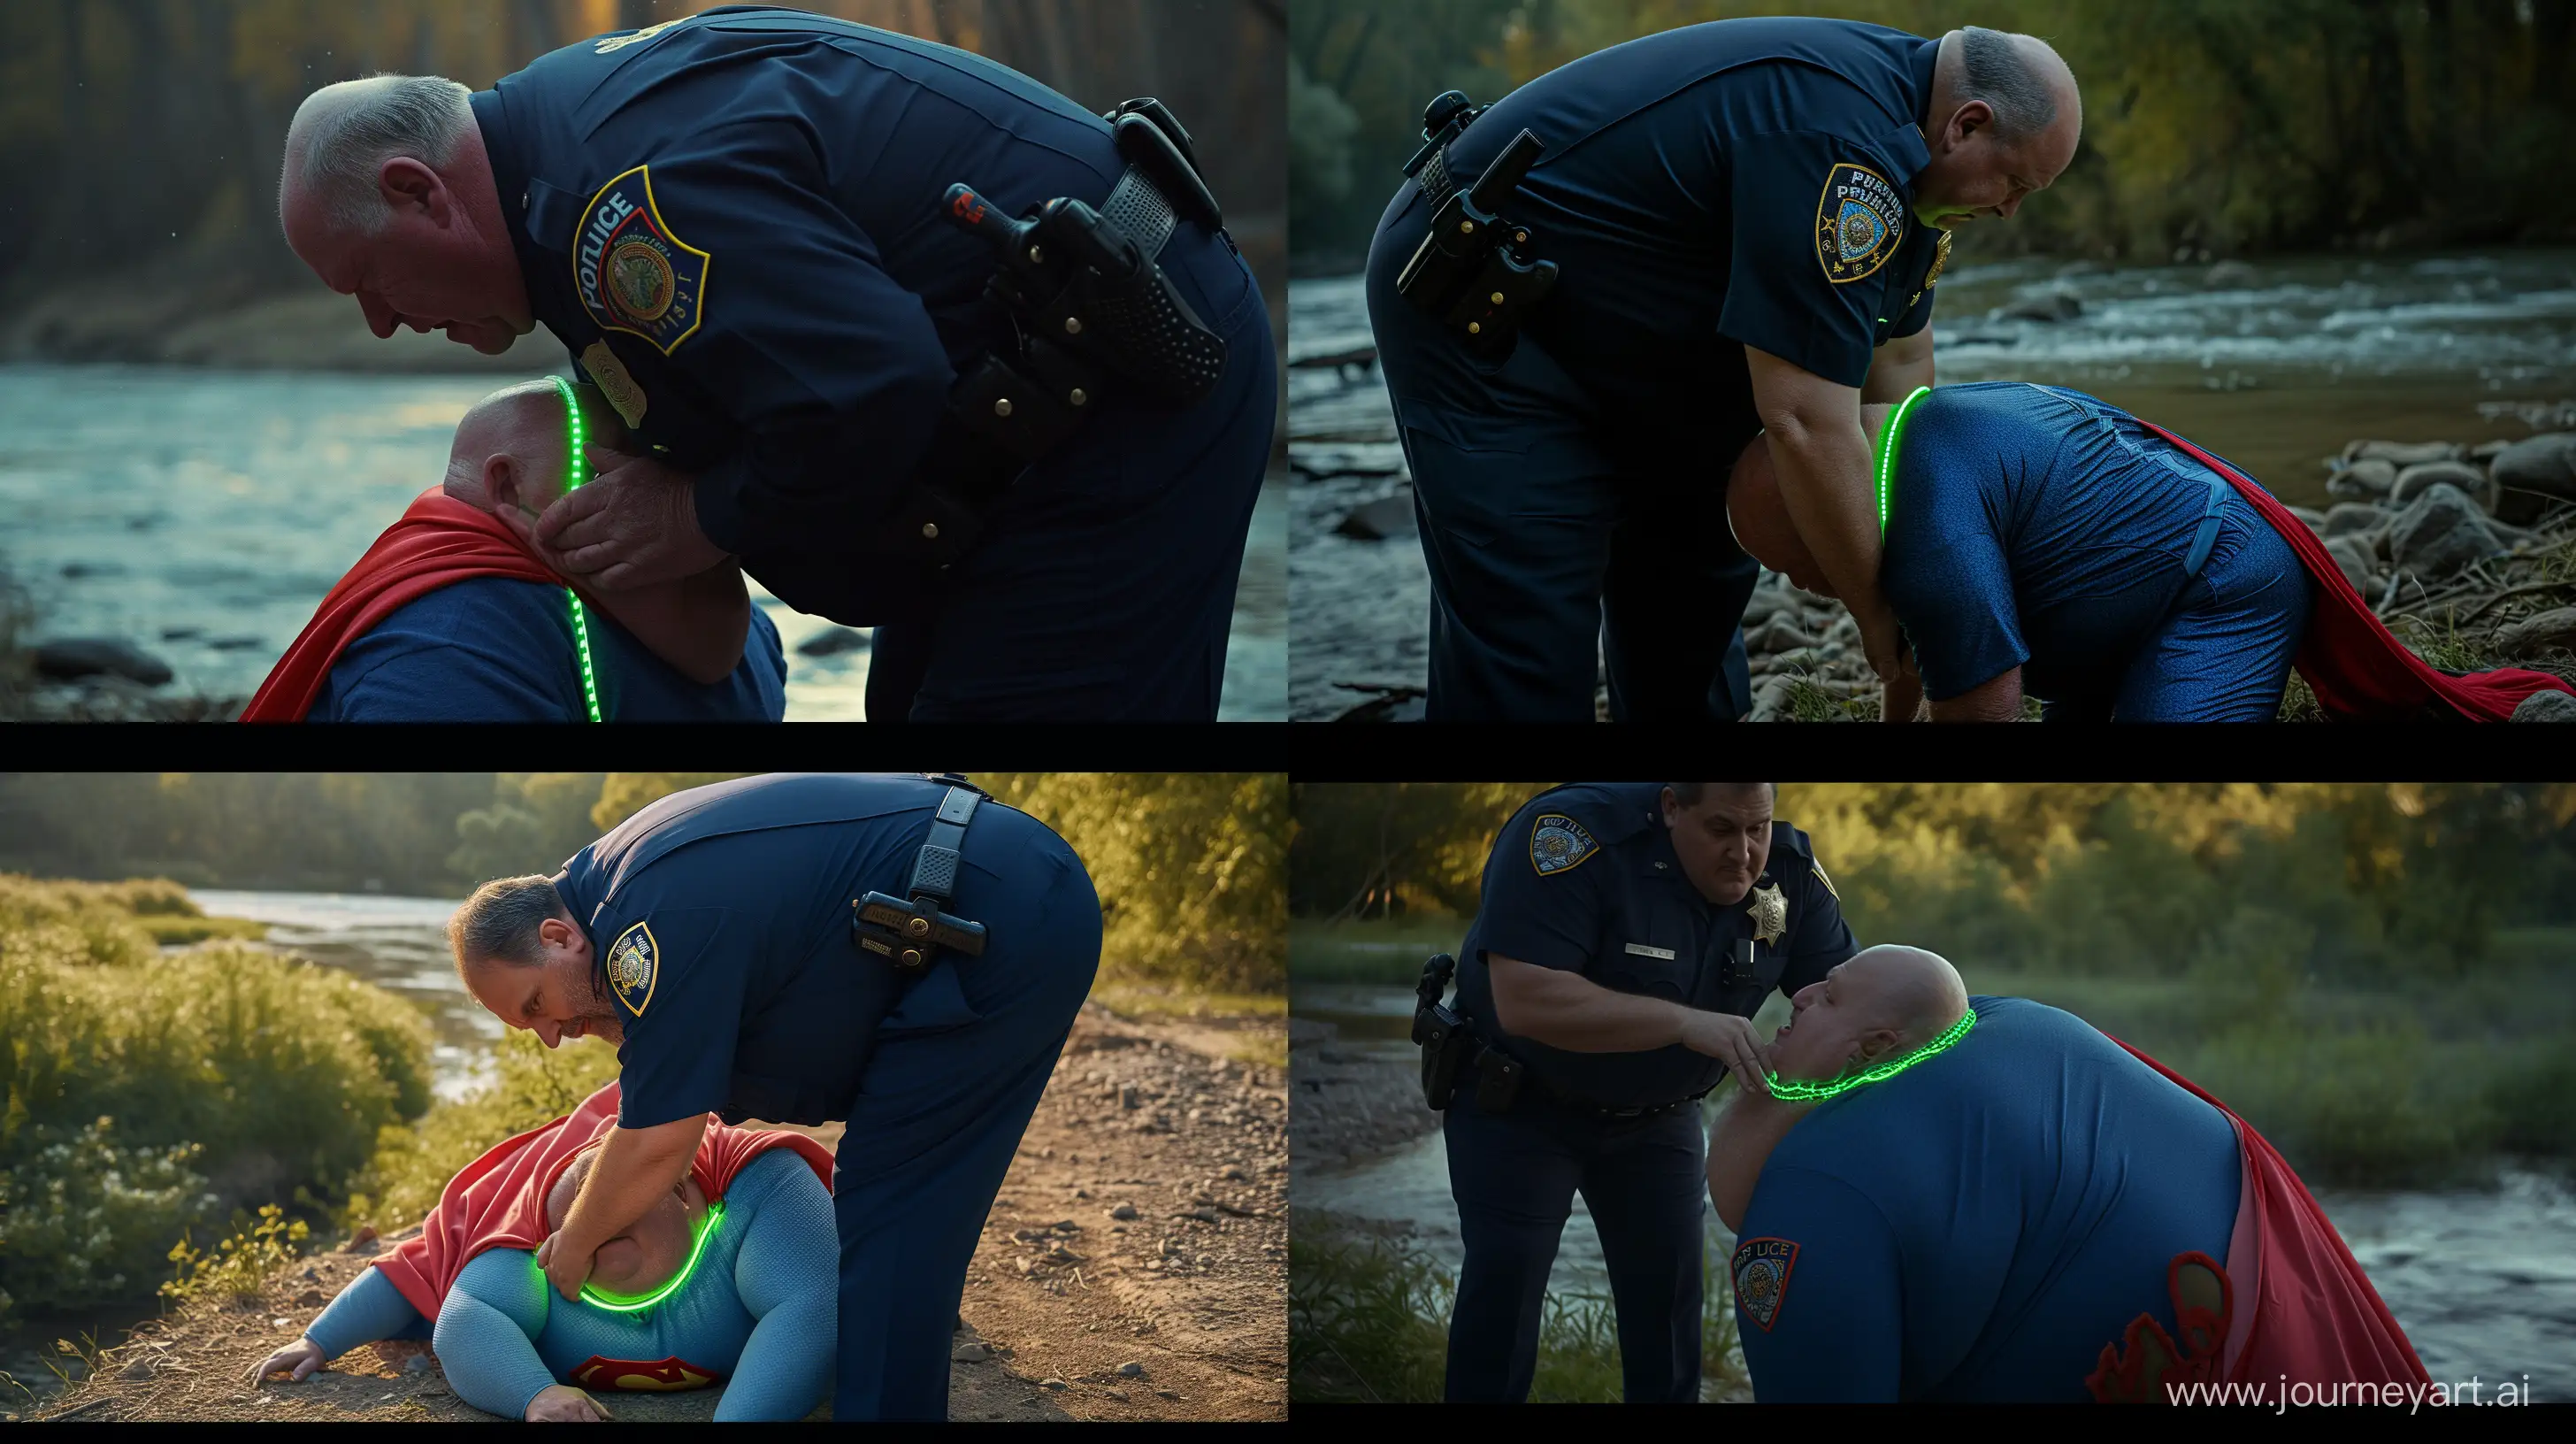 Elderly-Superman-in-Unique-Police-Uniform-Tightens-Neon-Dog-Collar-by-the-River